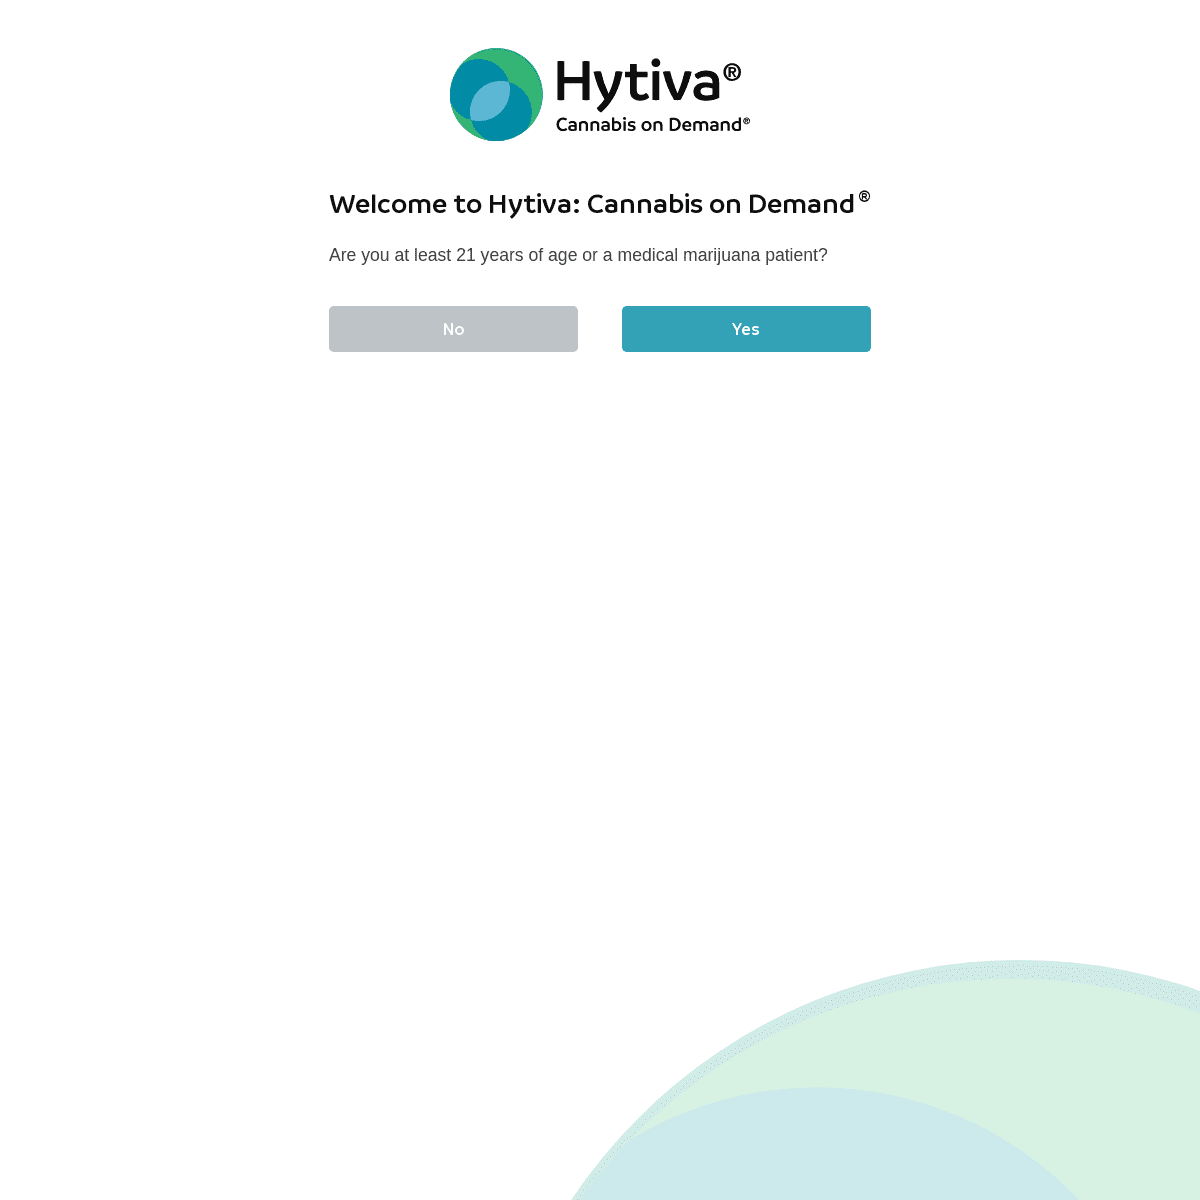 A complete backup of hytiva.com